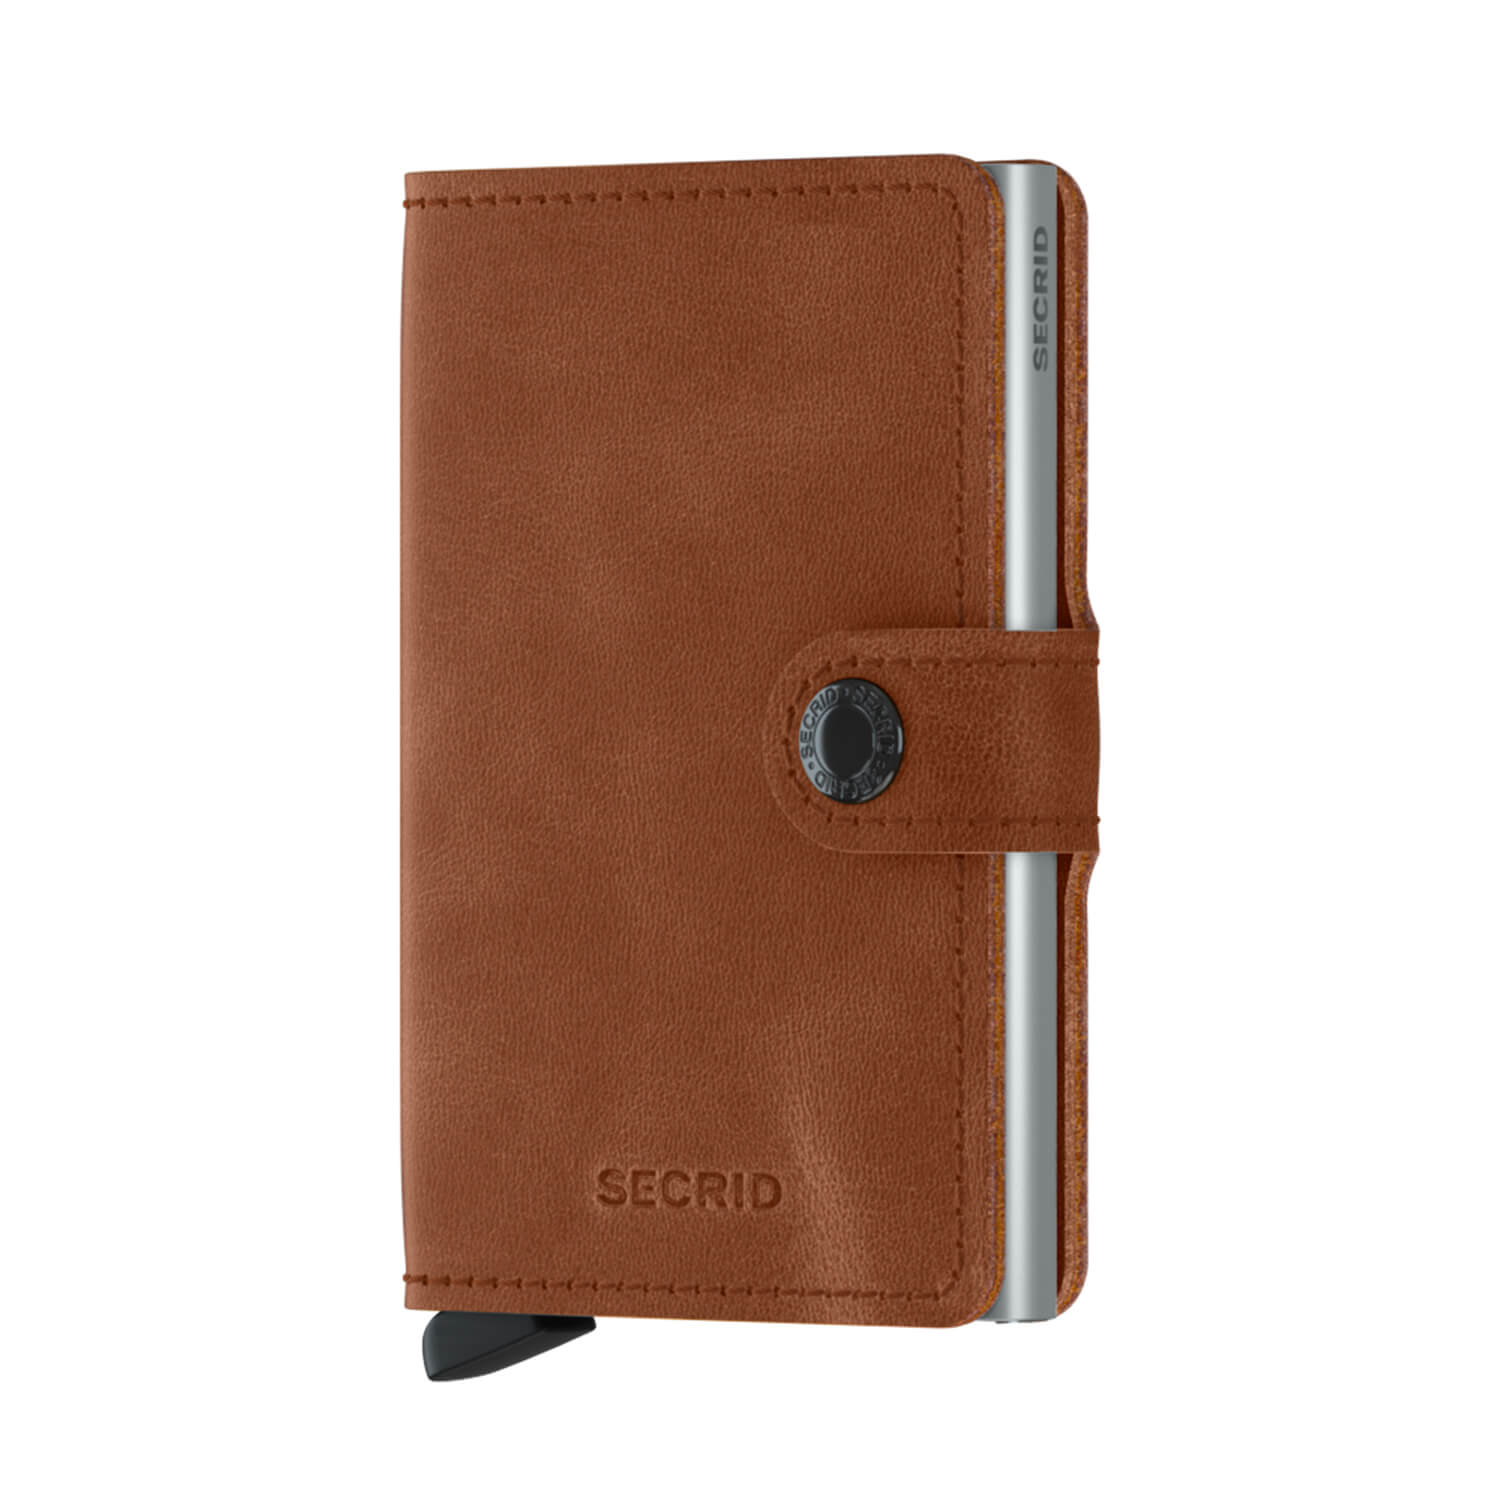 Wissen bevestig alstublieft Omleiden Secrid Mini Wallet - Vintage Leather – Ecology